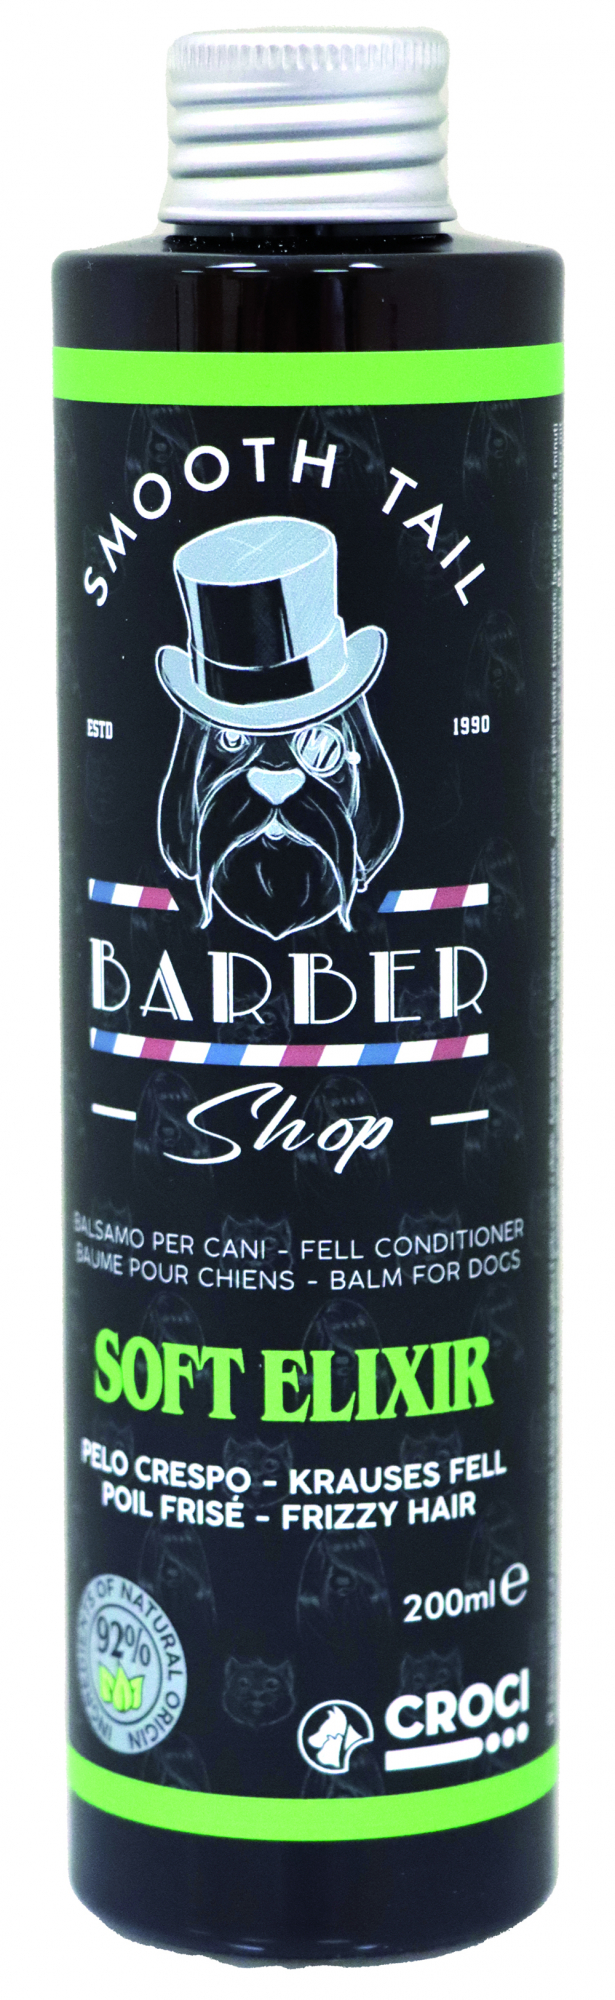 BARBERSHOP Soft Elixir Conditioner für Hunde mit krausem Fell